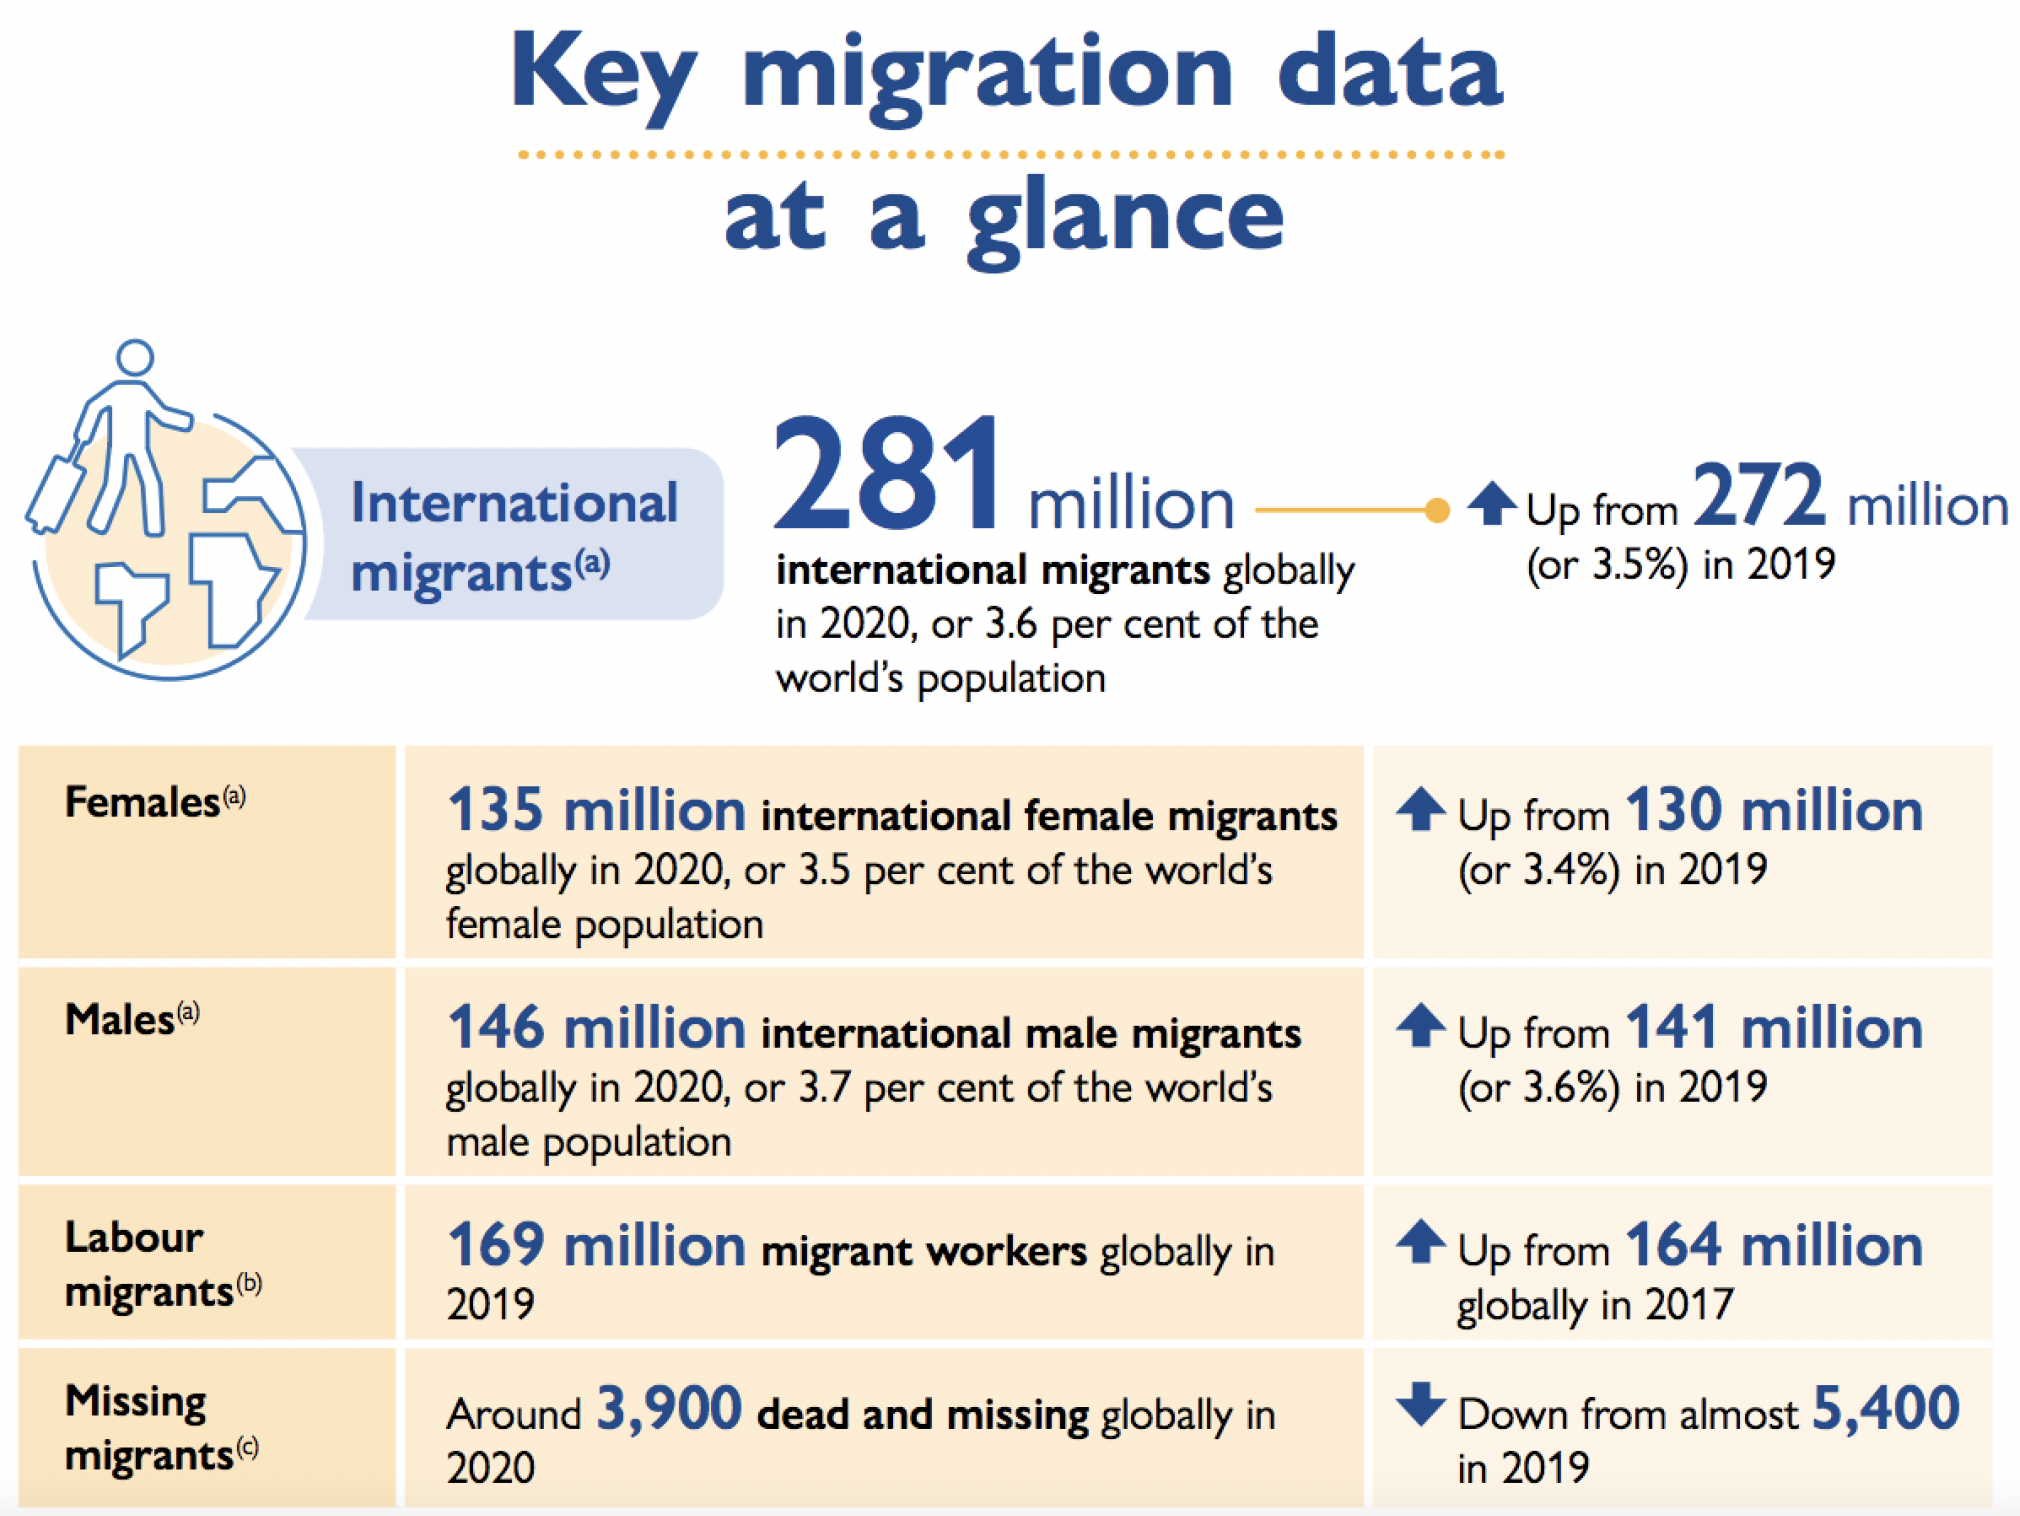 Key migration data at a glance